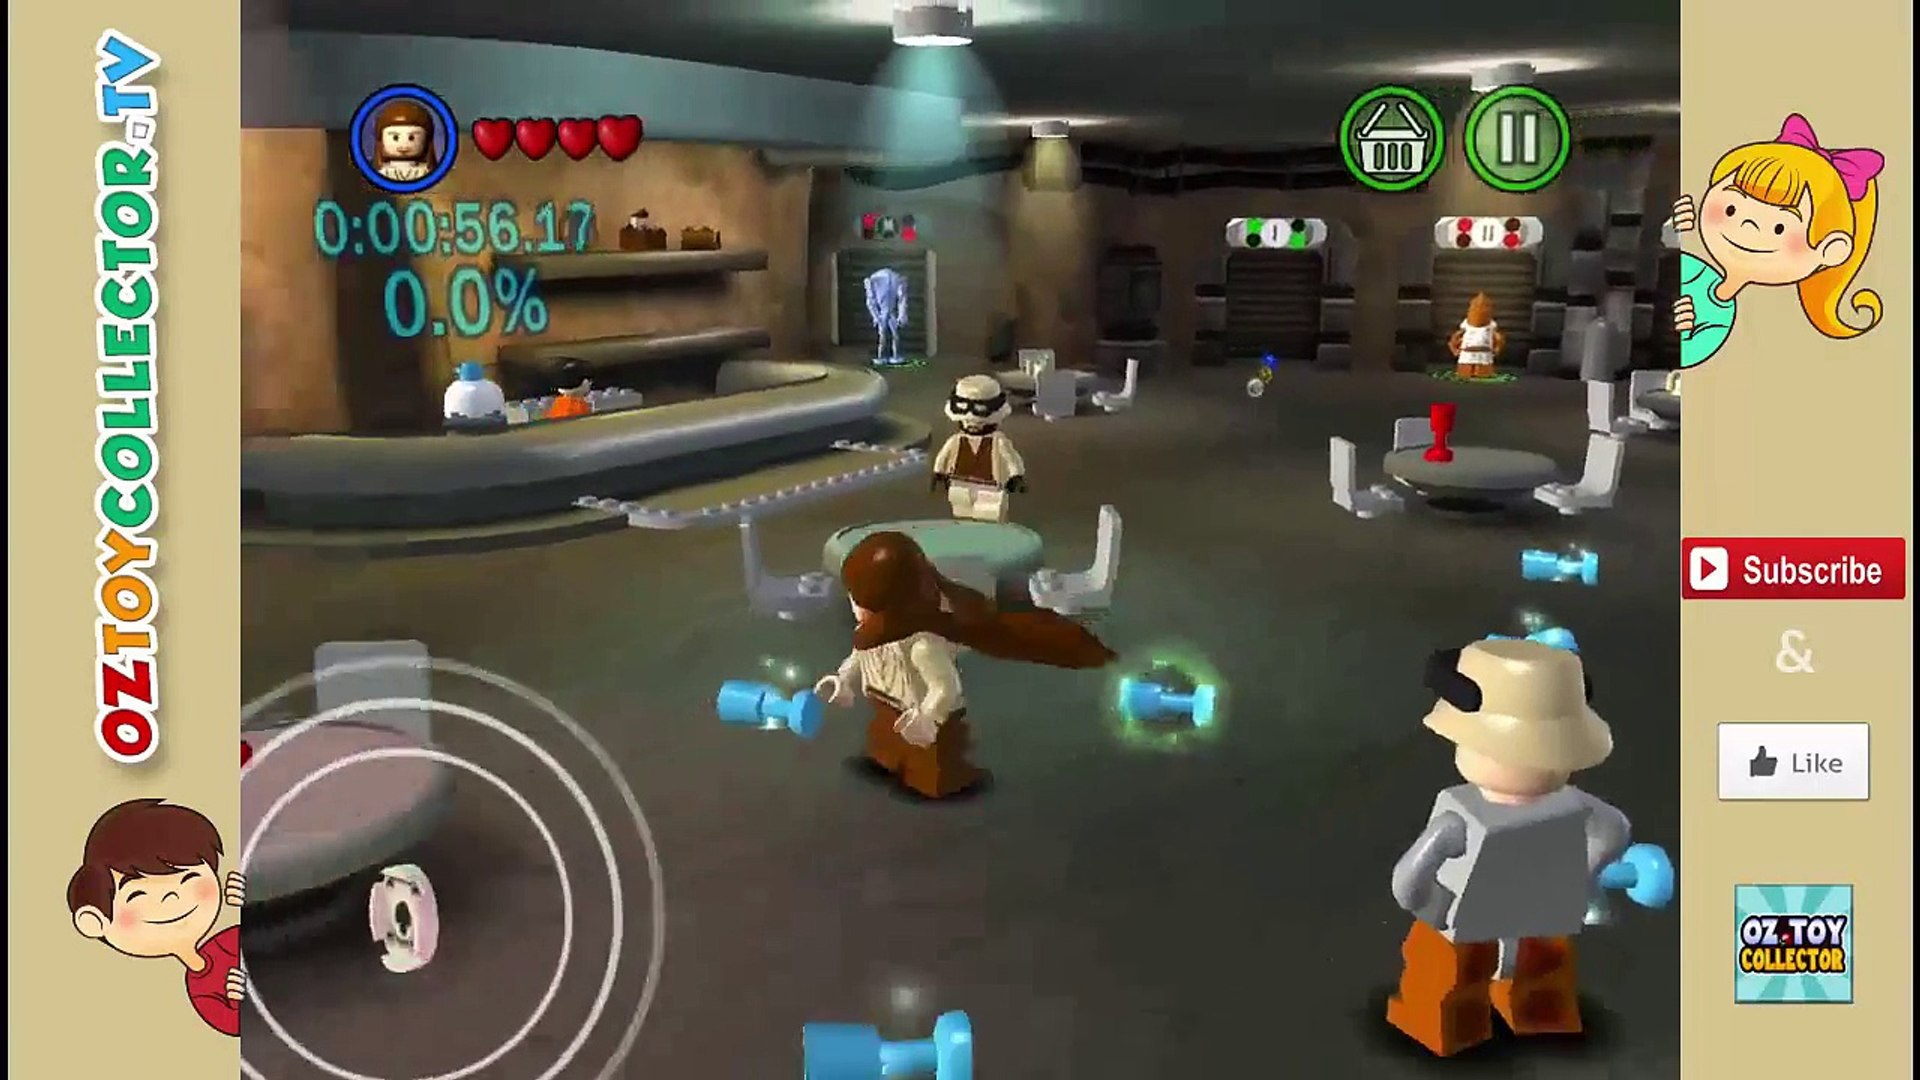 Lego Star Wars The Complete Saga ipad Game walkthrough - video Dailymotion